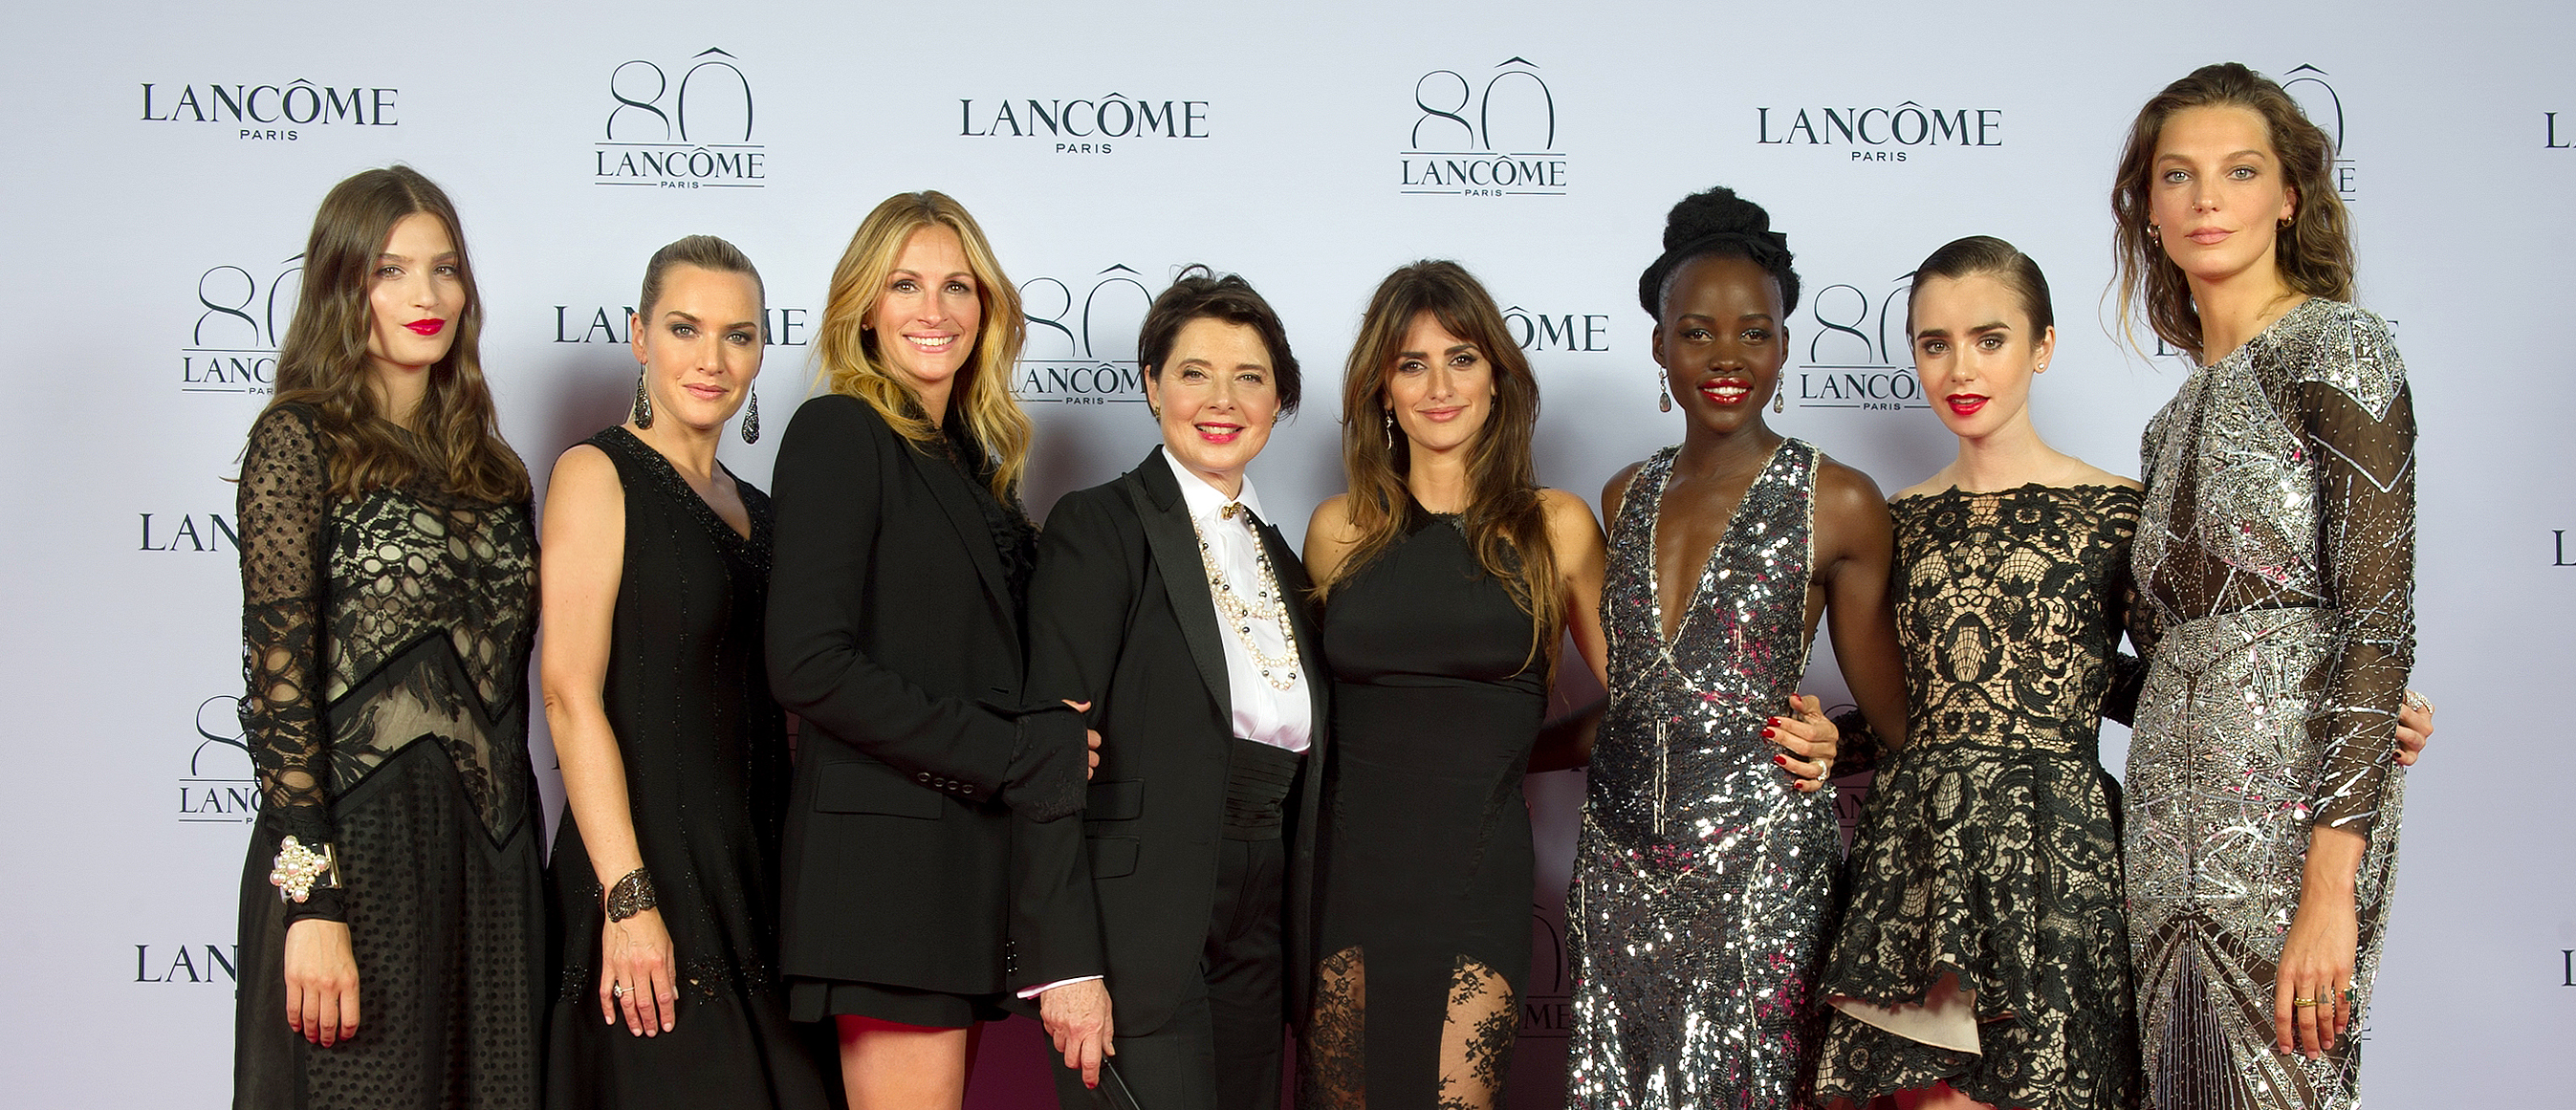 Embajadoras fiesta 80 aniversario Lancôme